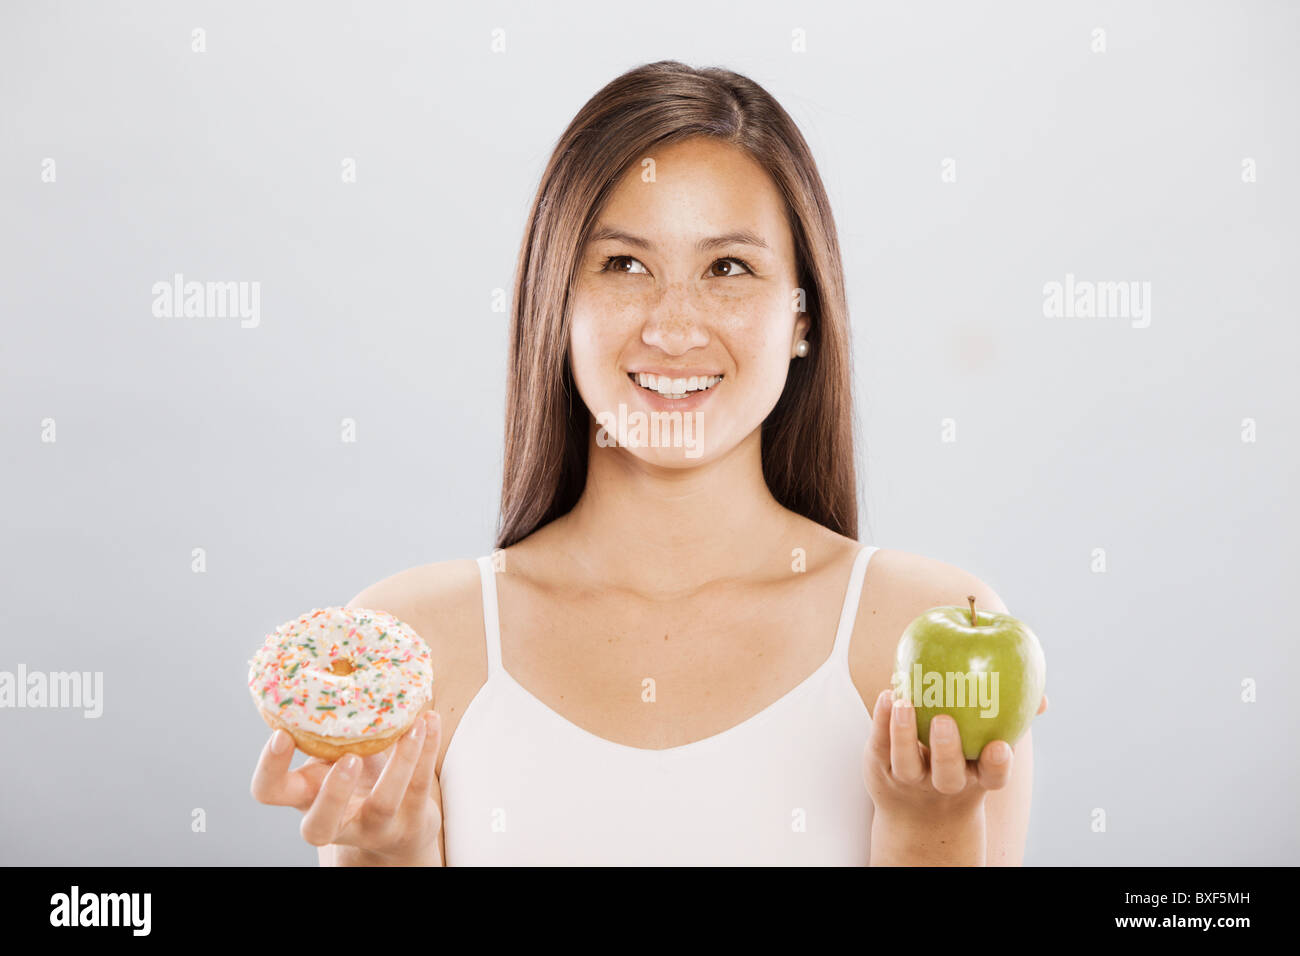 Woman holding an doughnut and an apple Stock Photo